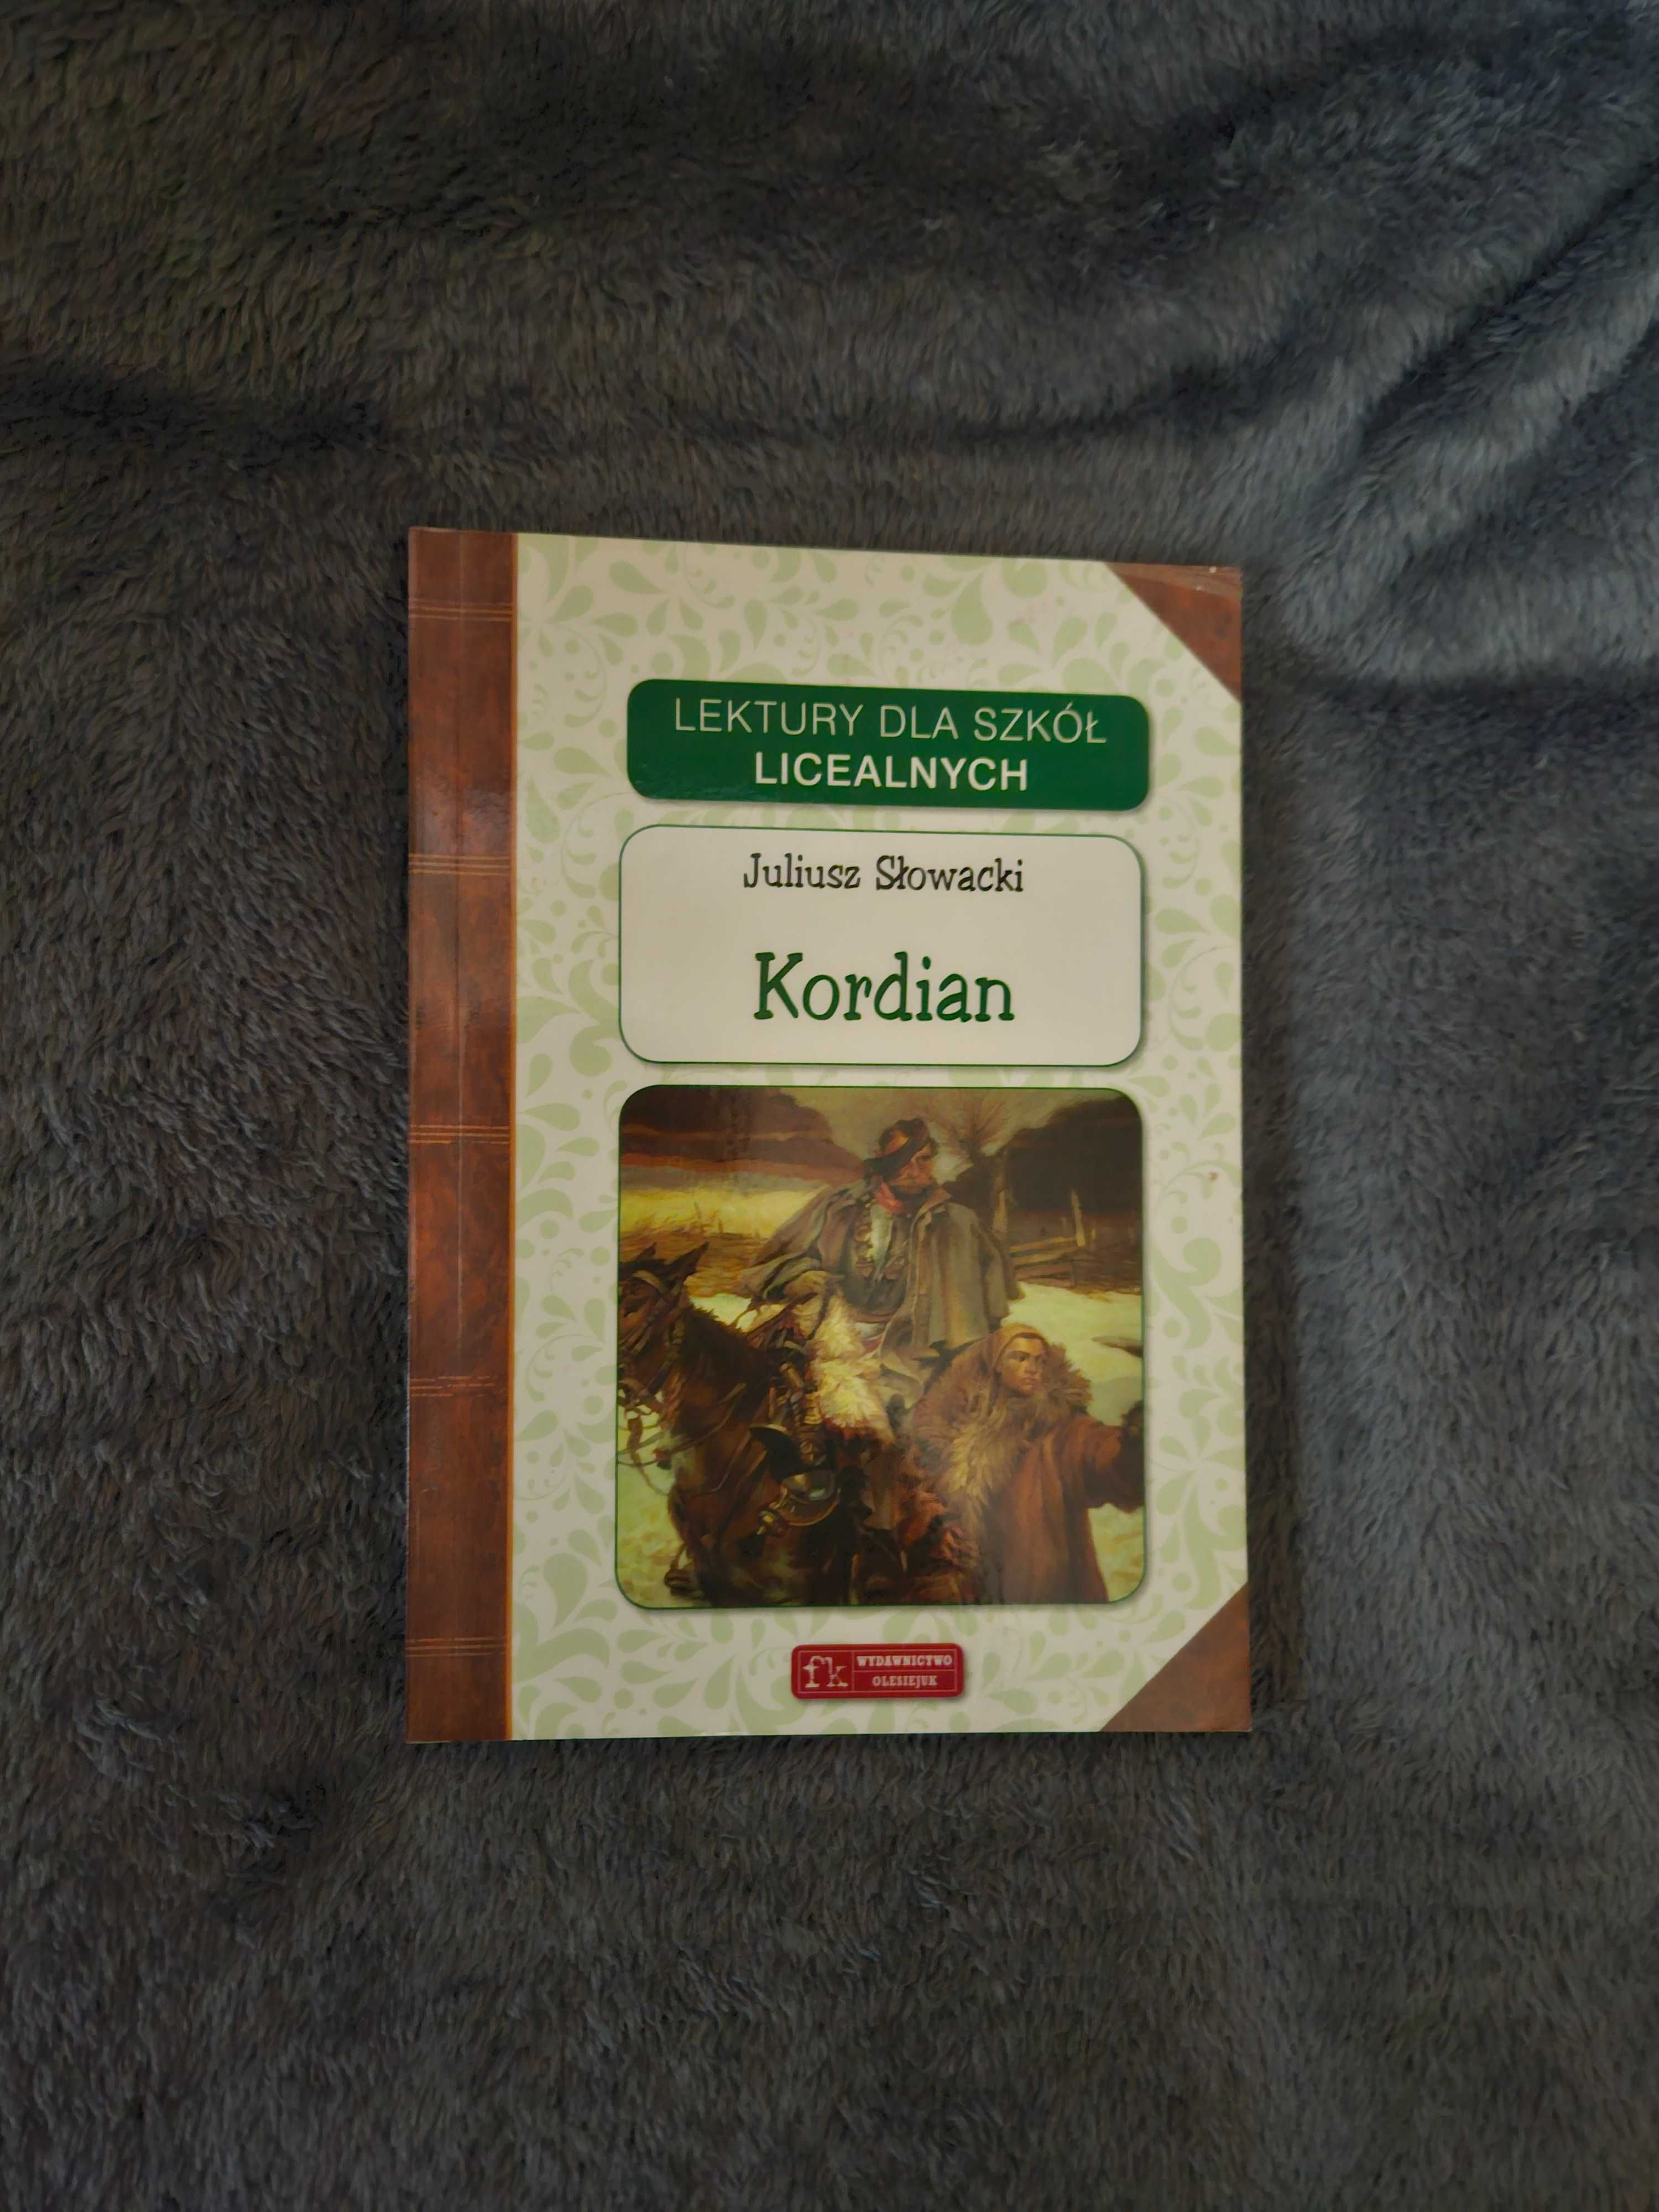 Książka "Kordian" Juliusz Słowacki